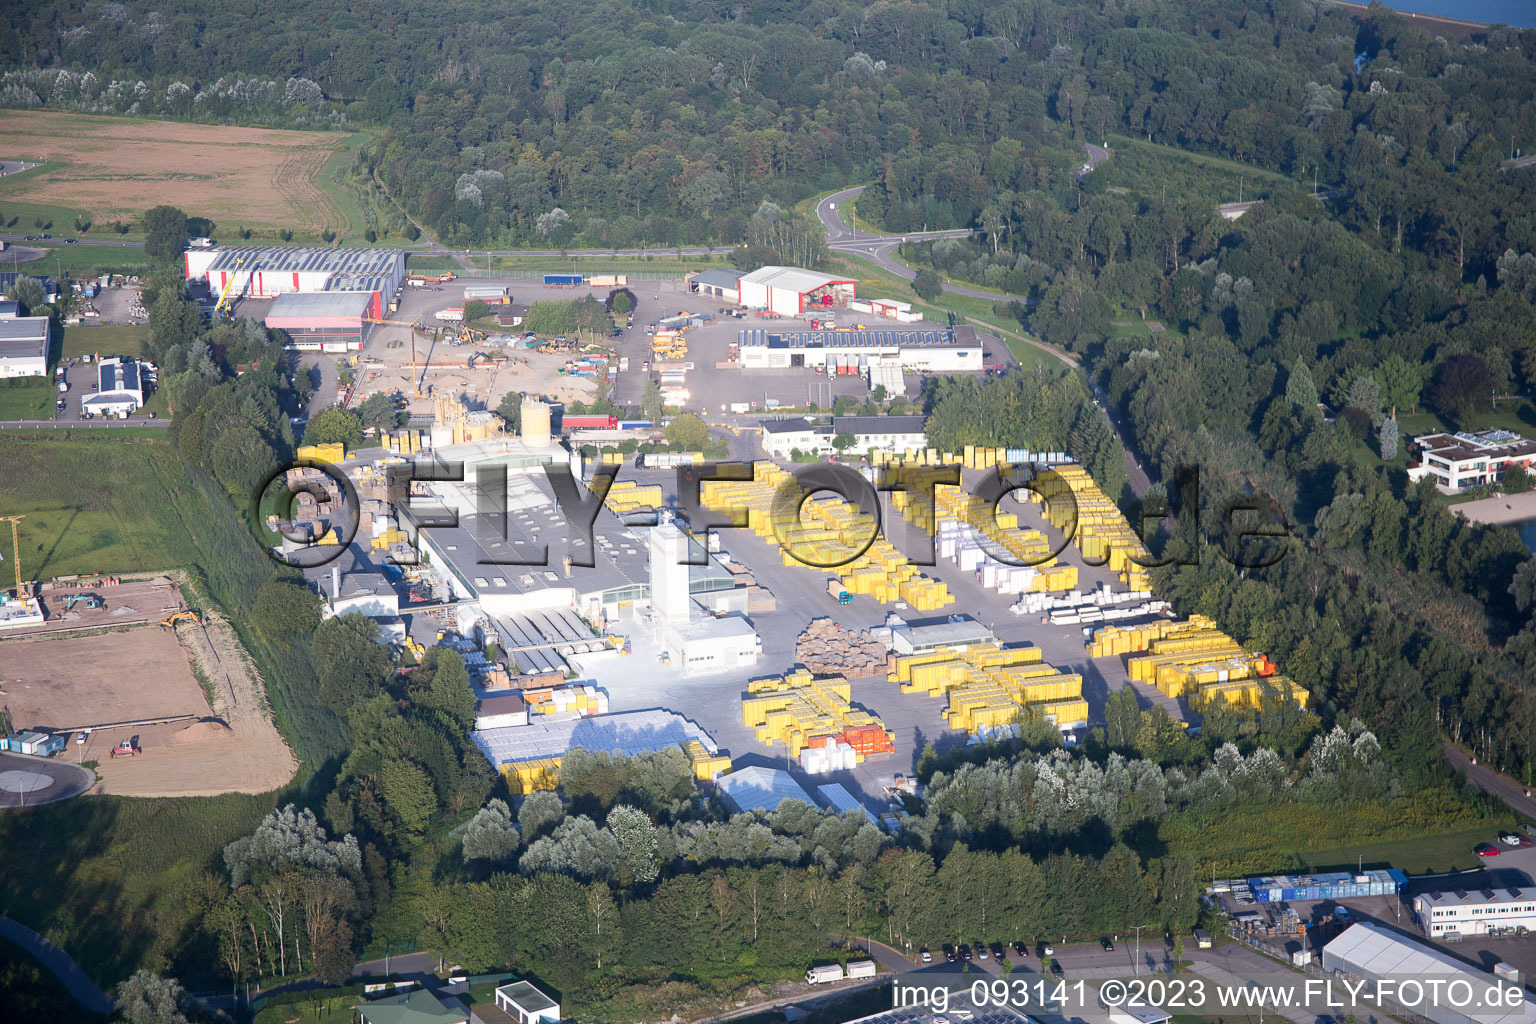 District Freistett in Rheinau in the state Baden-Wuerttemberg, Germany viewn from the air